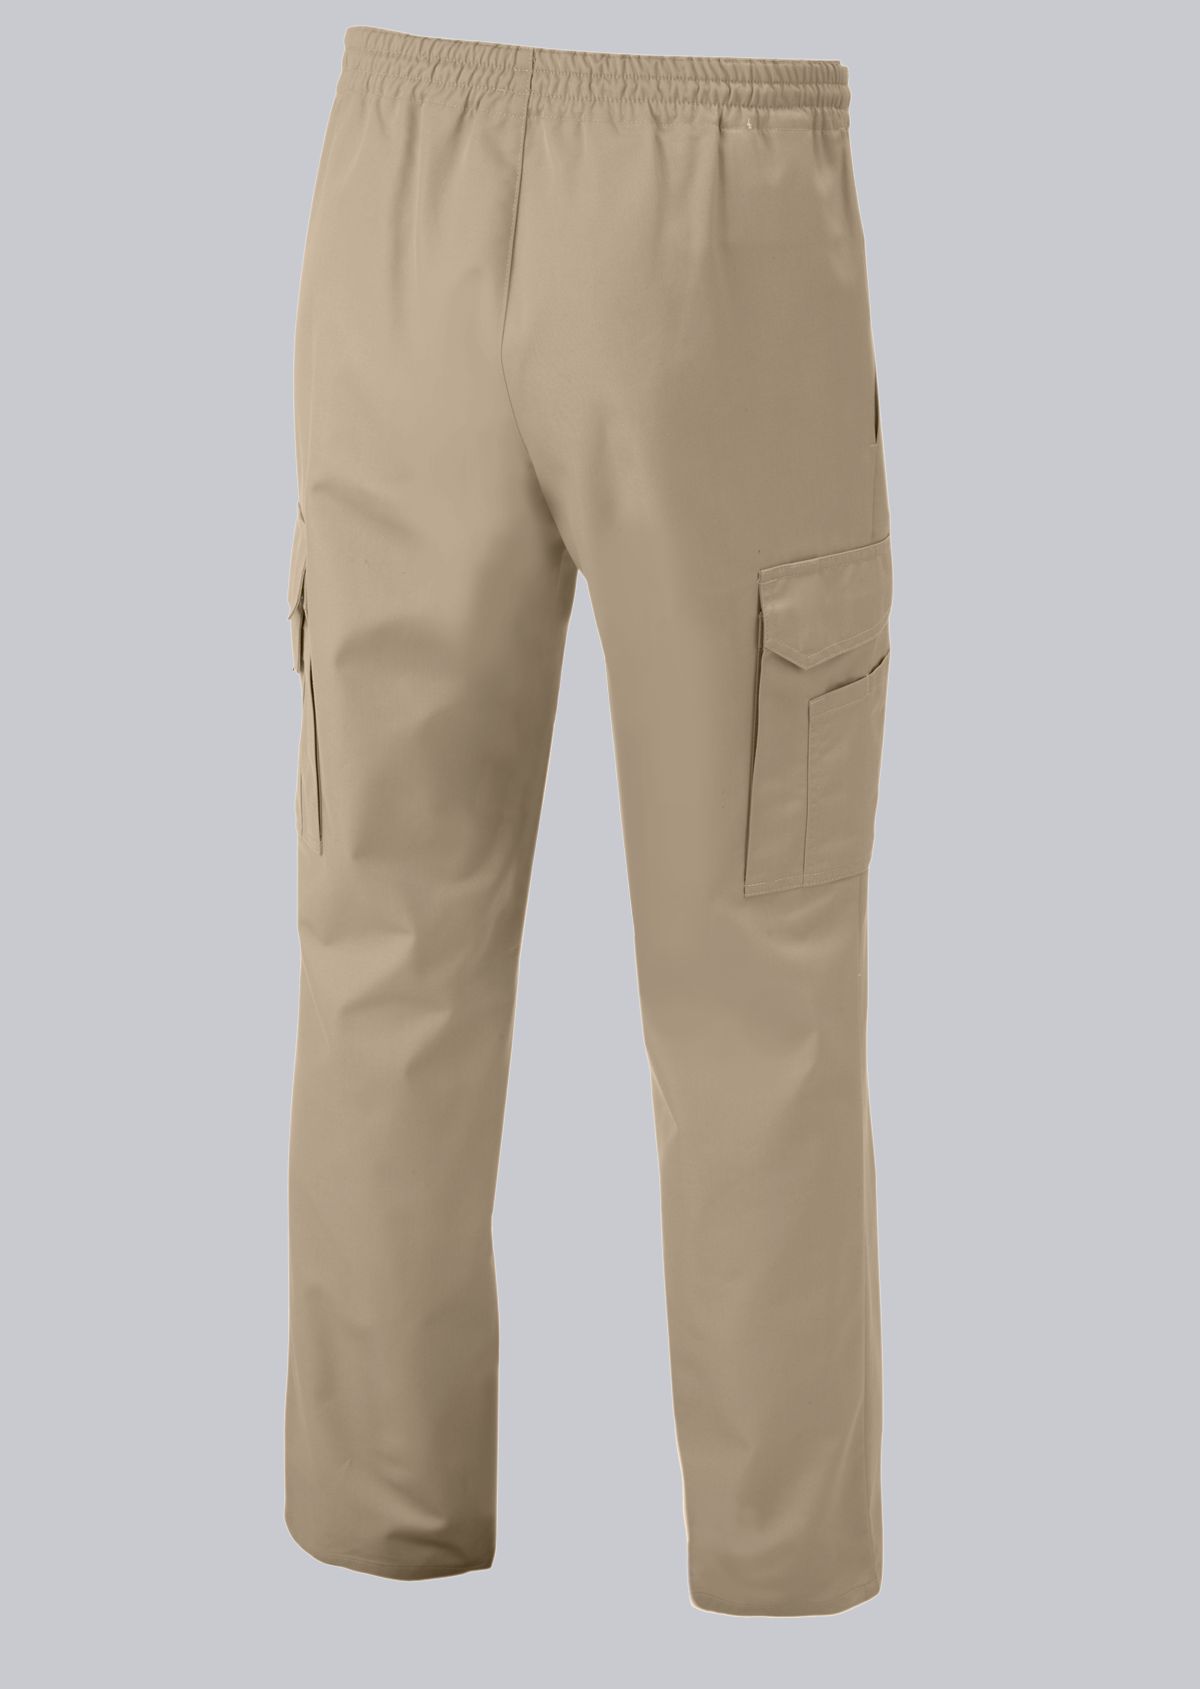 BP® Pantalon unisexe